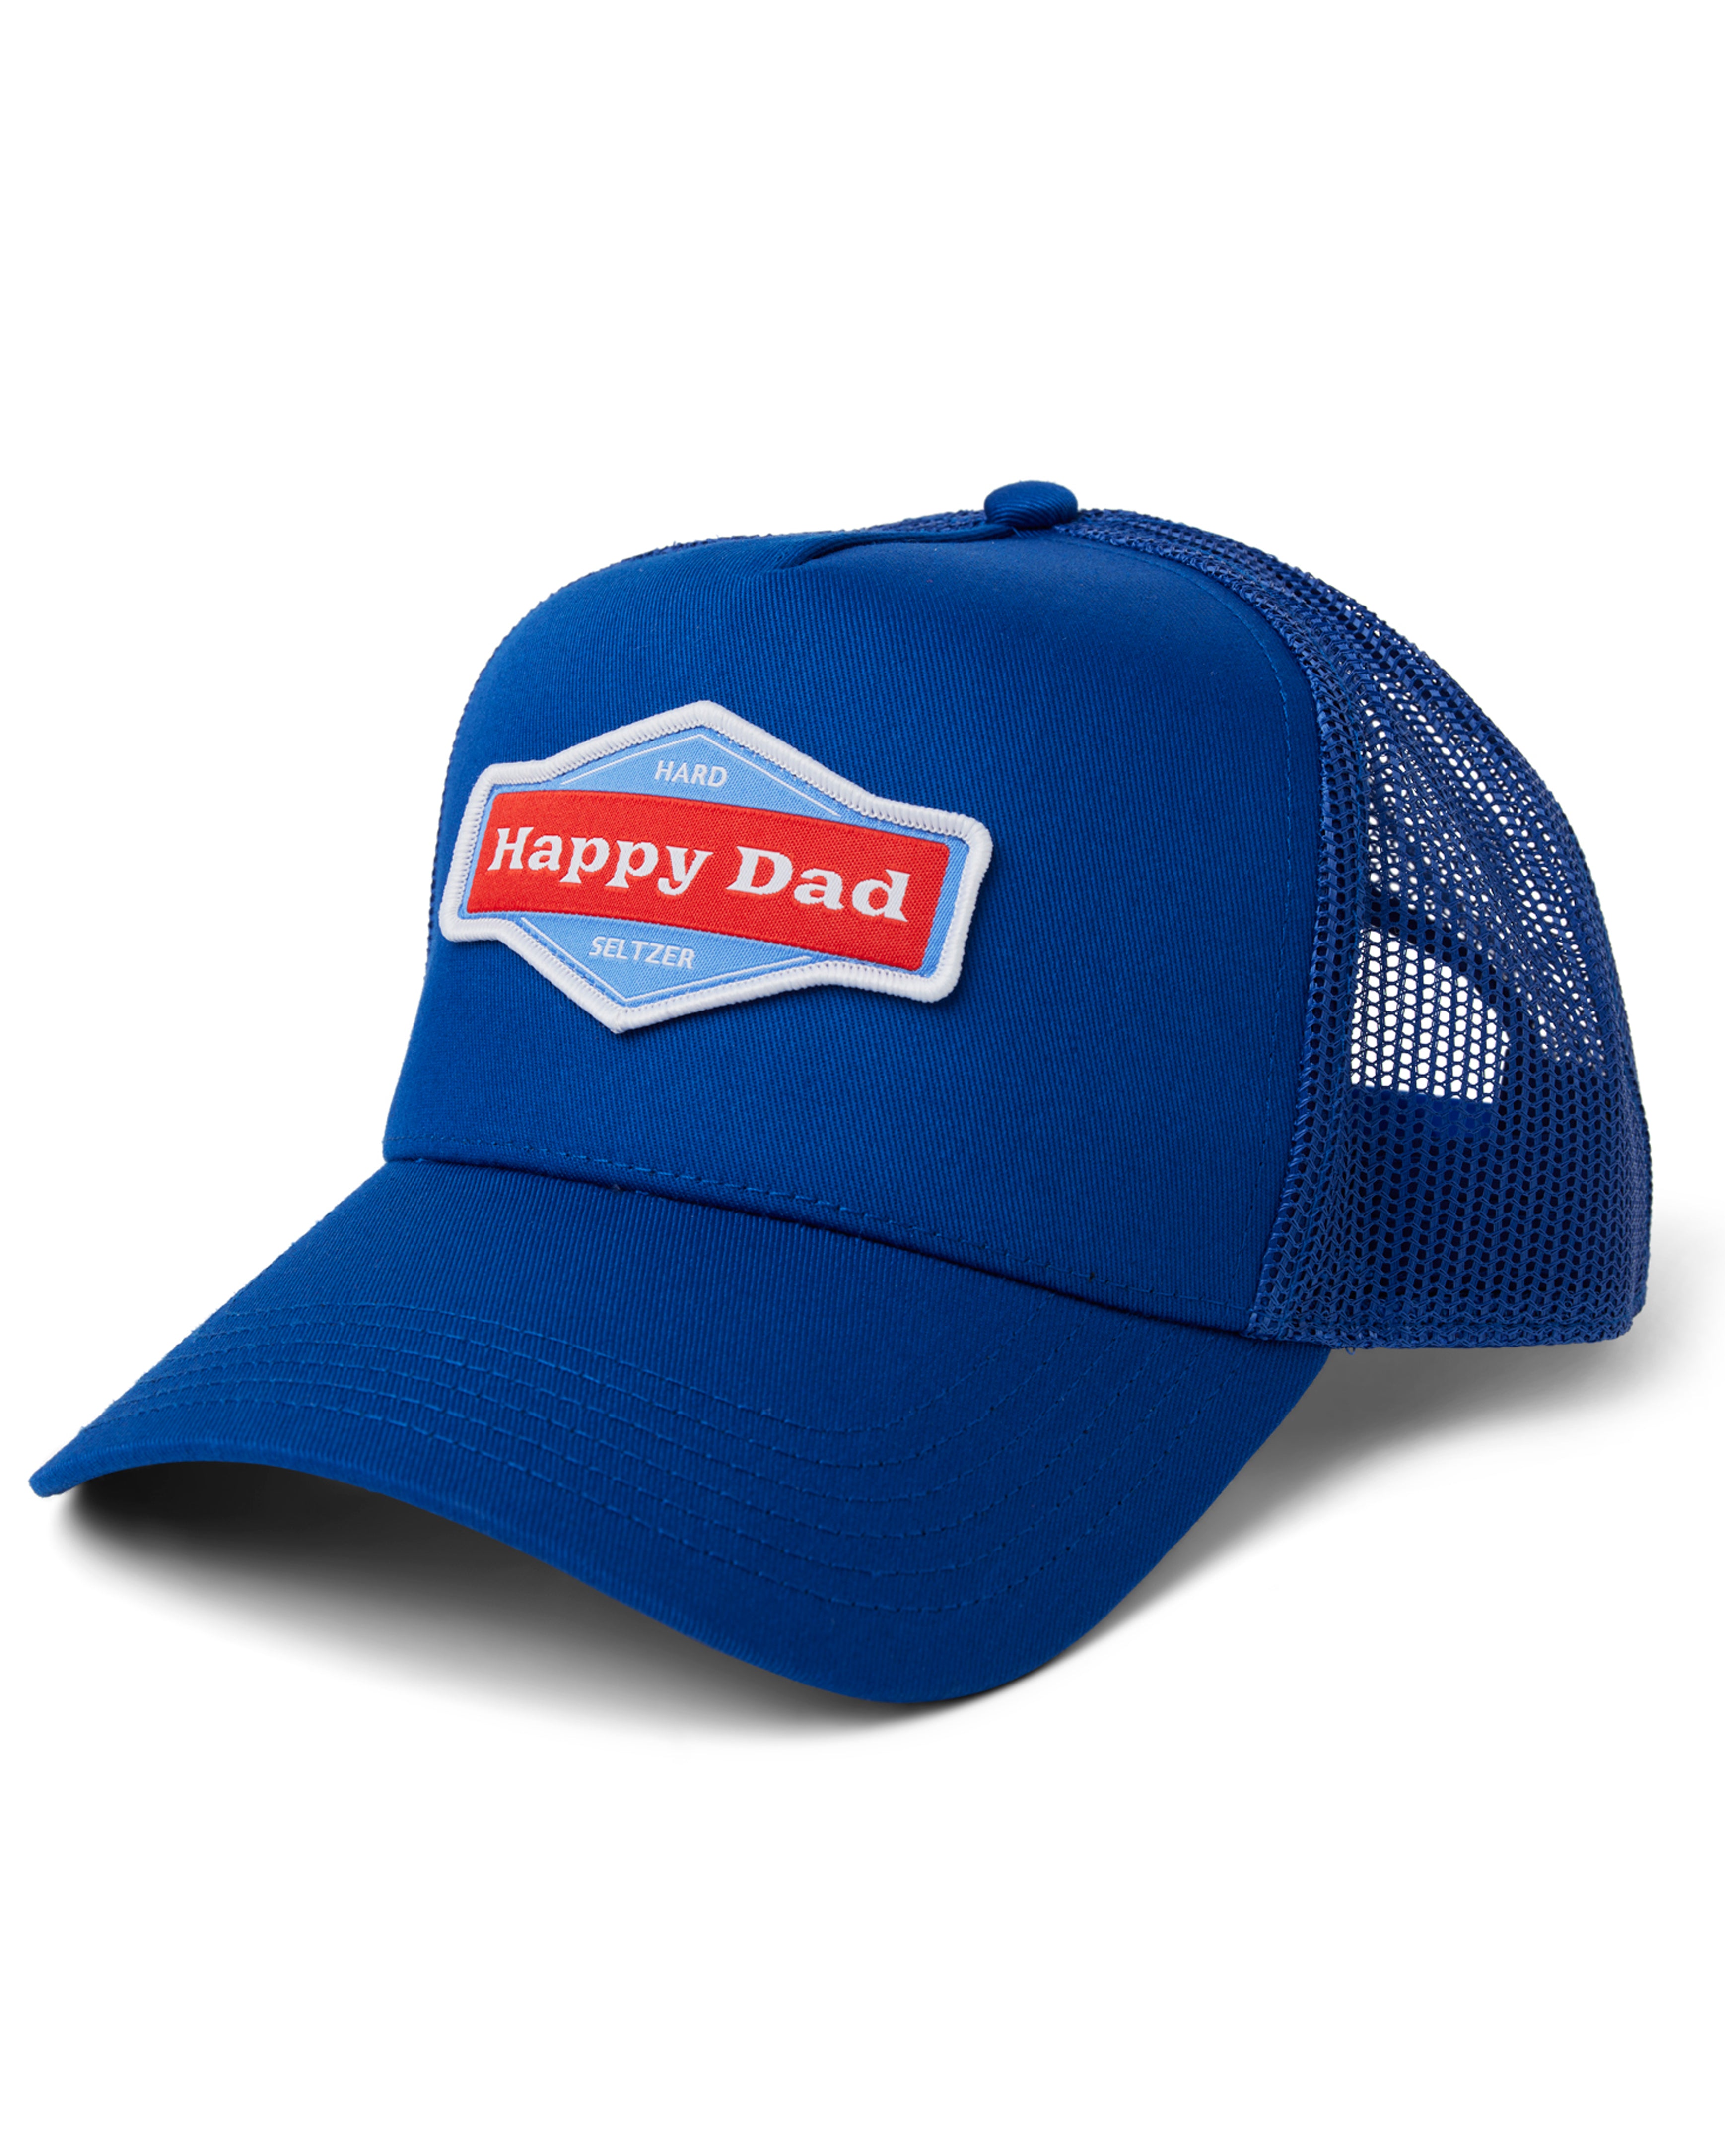 Happy Dad Trucker Hat (Royal Blue)